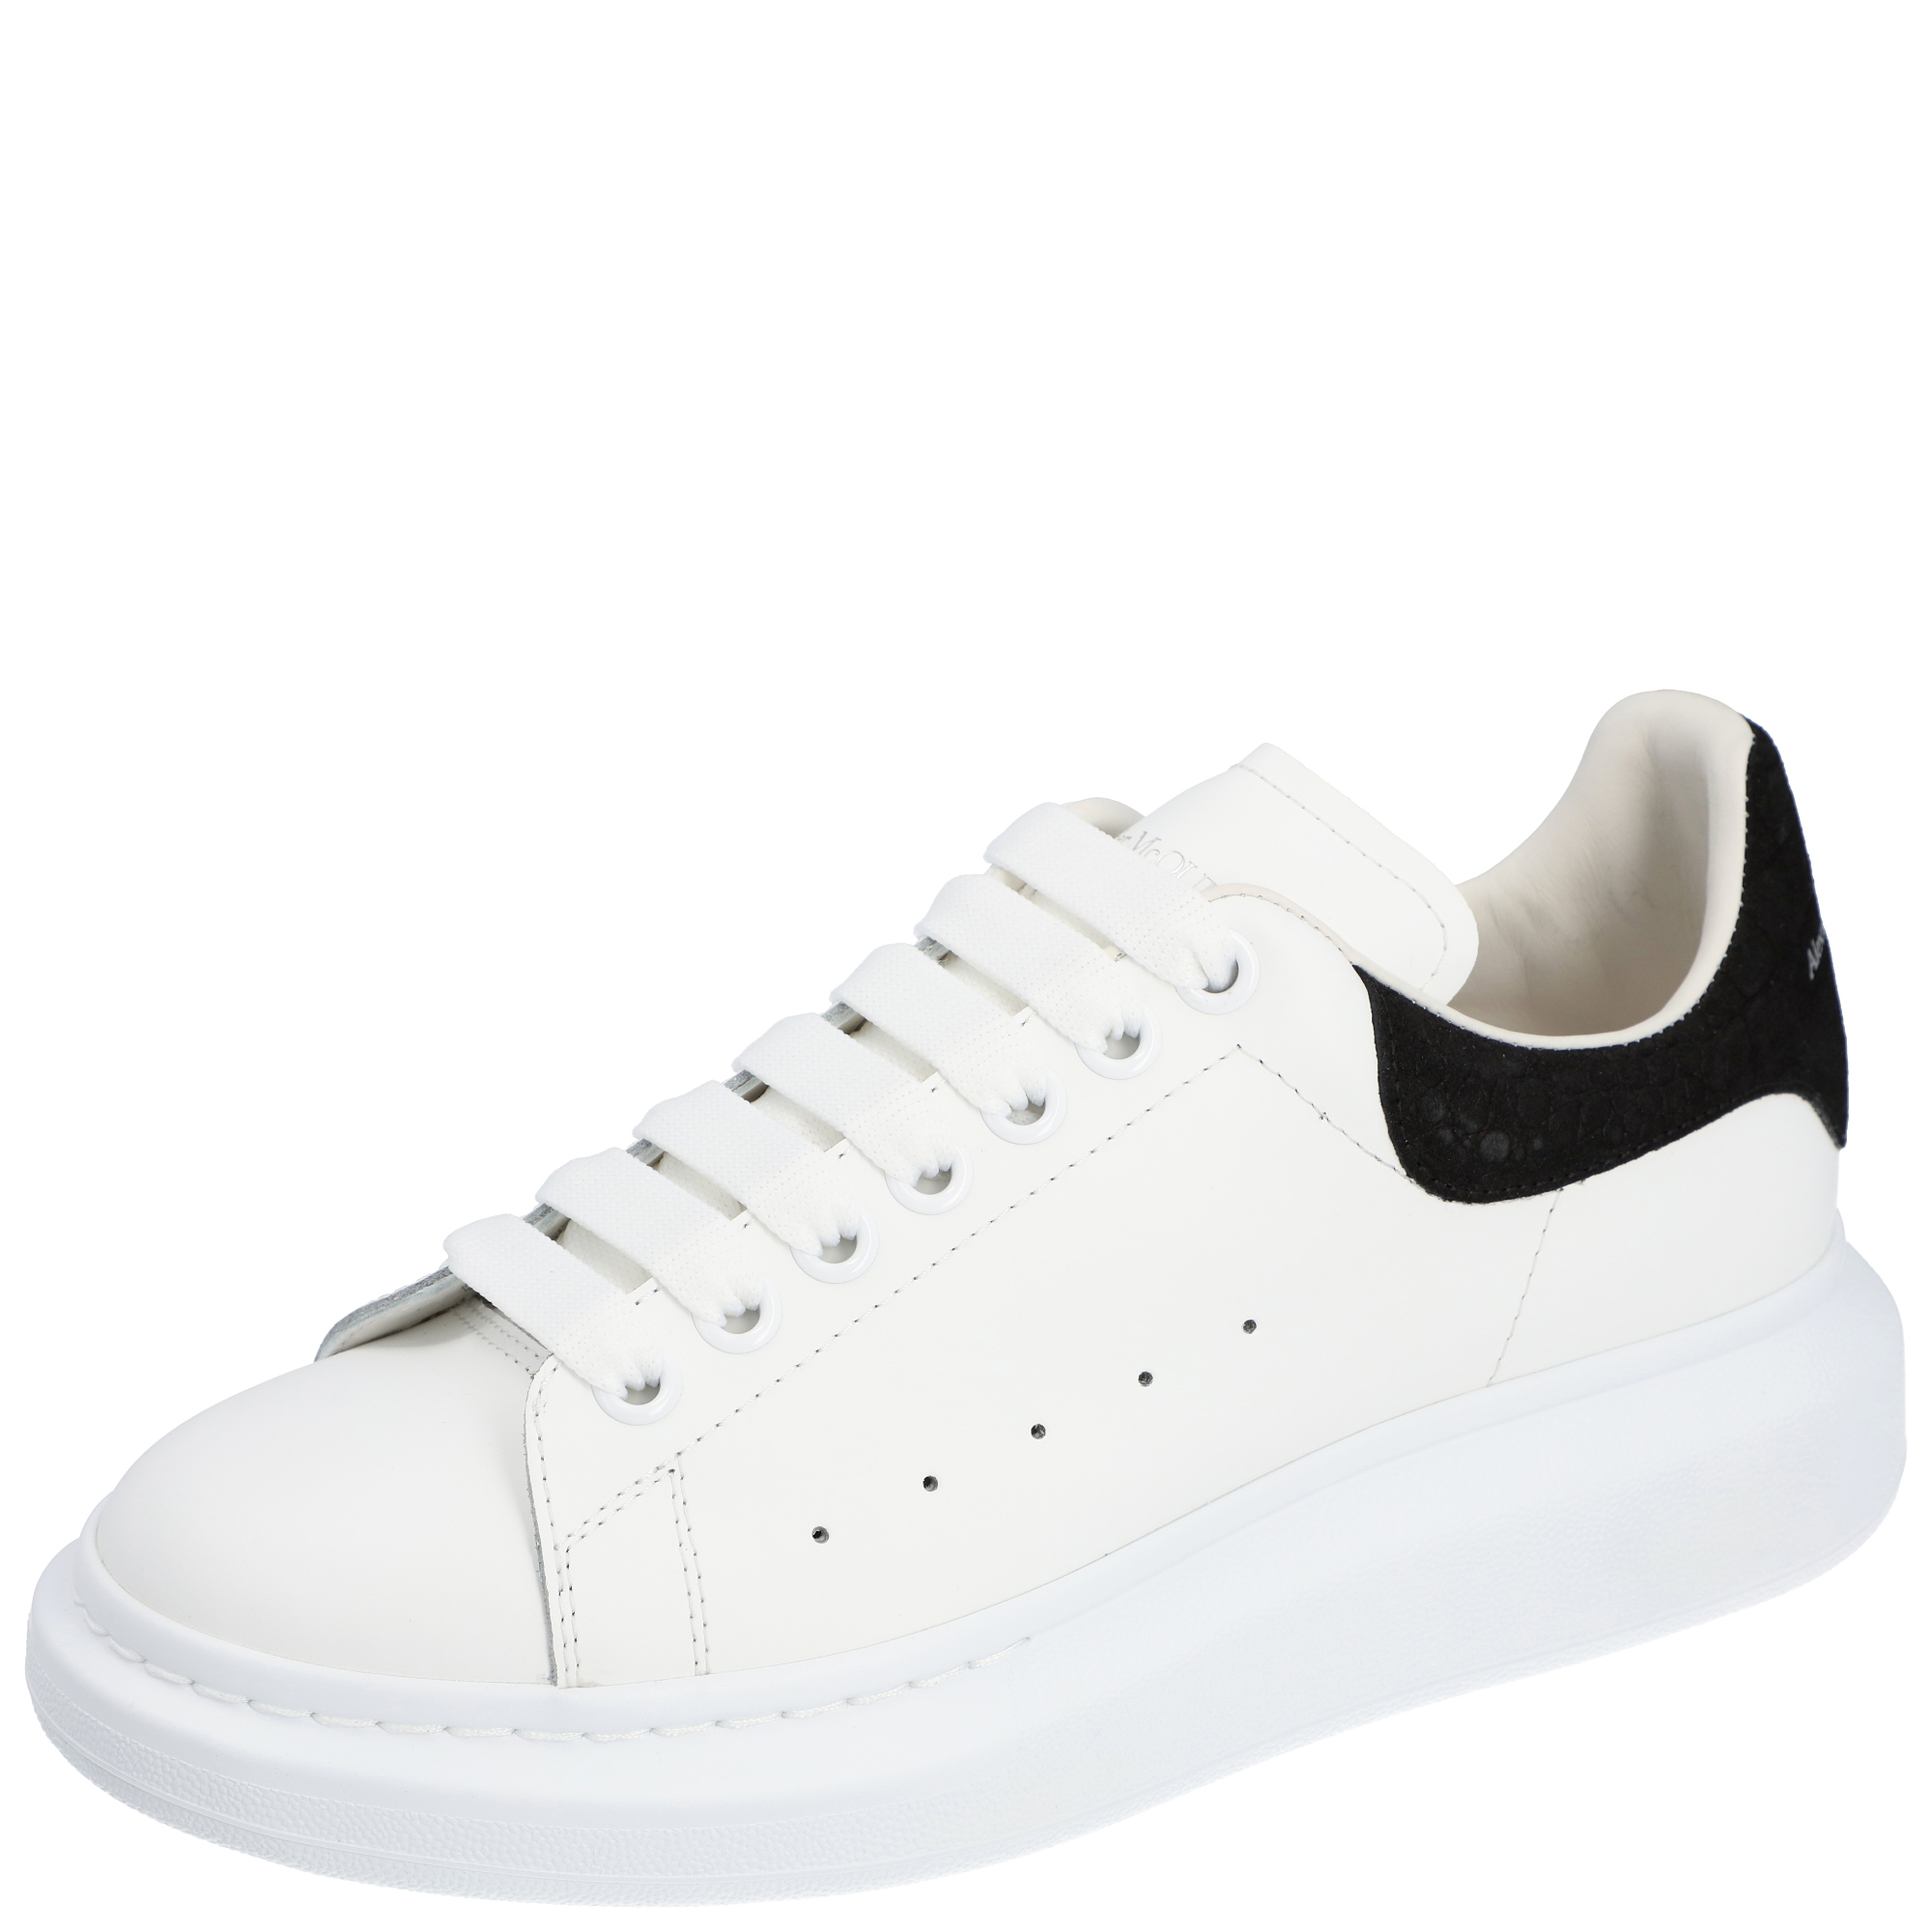 Alexander McQueen White/Black Leather Oversized Sneakers EU 39.5